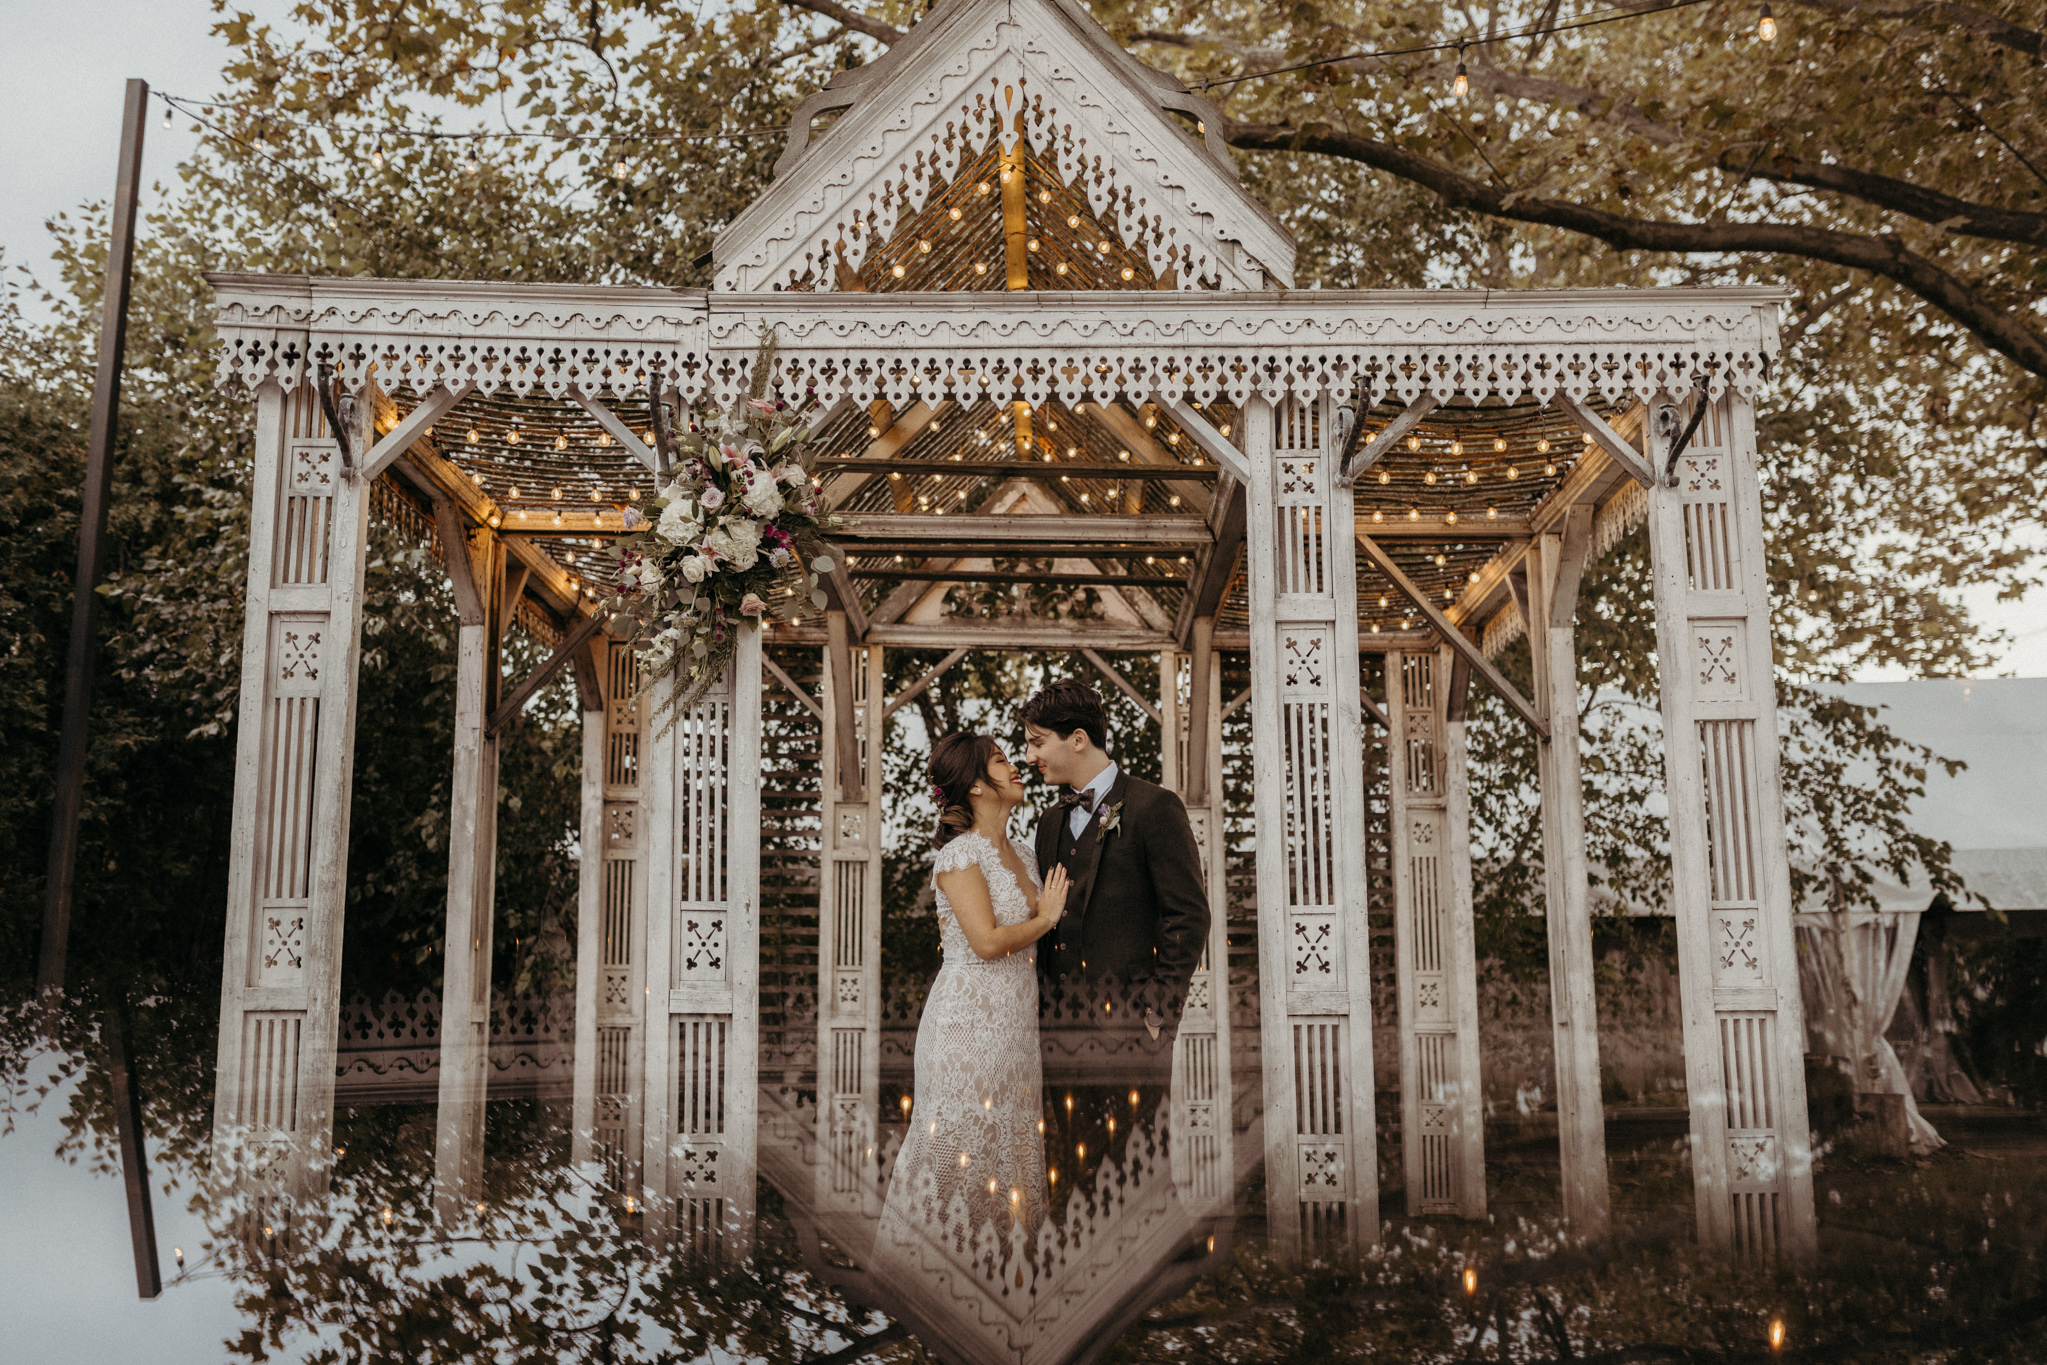 Romantic fall-inspired intimate wedding at terrain at styers, pennsylvania elopement photographer, unique outdoor venue ideas near philadelphia